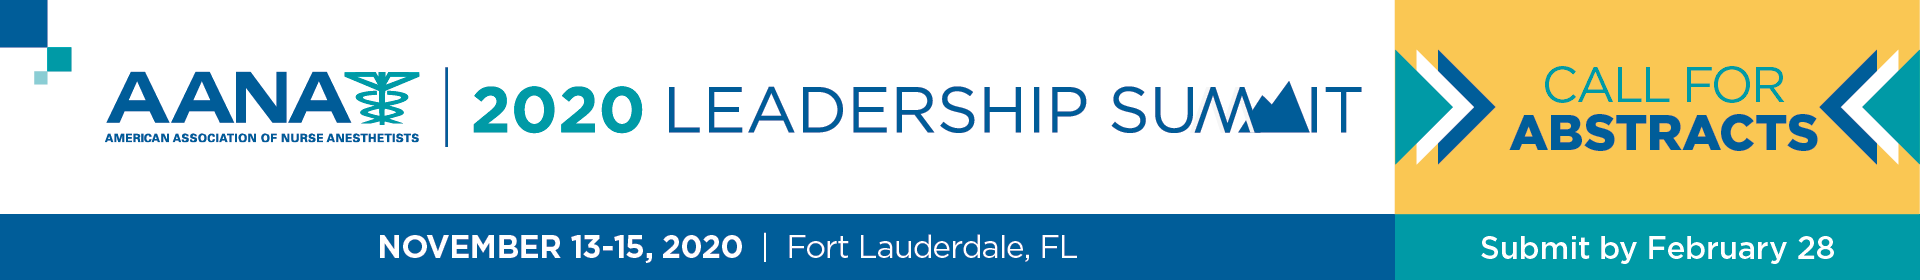 2020 Leadership Summit Event Banner